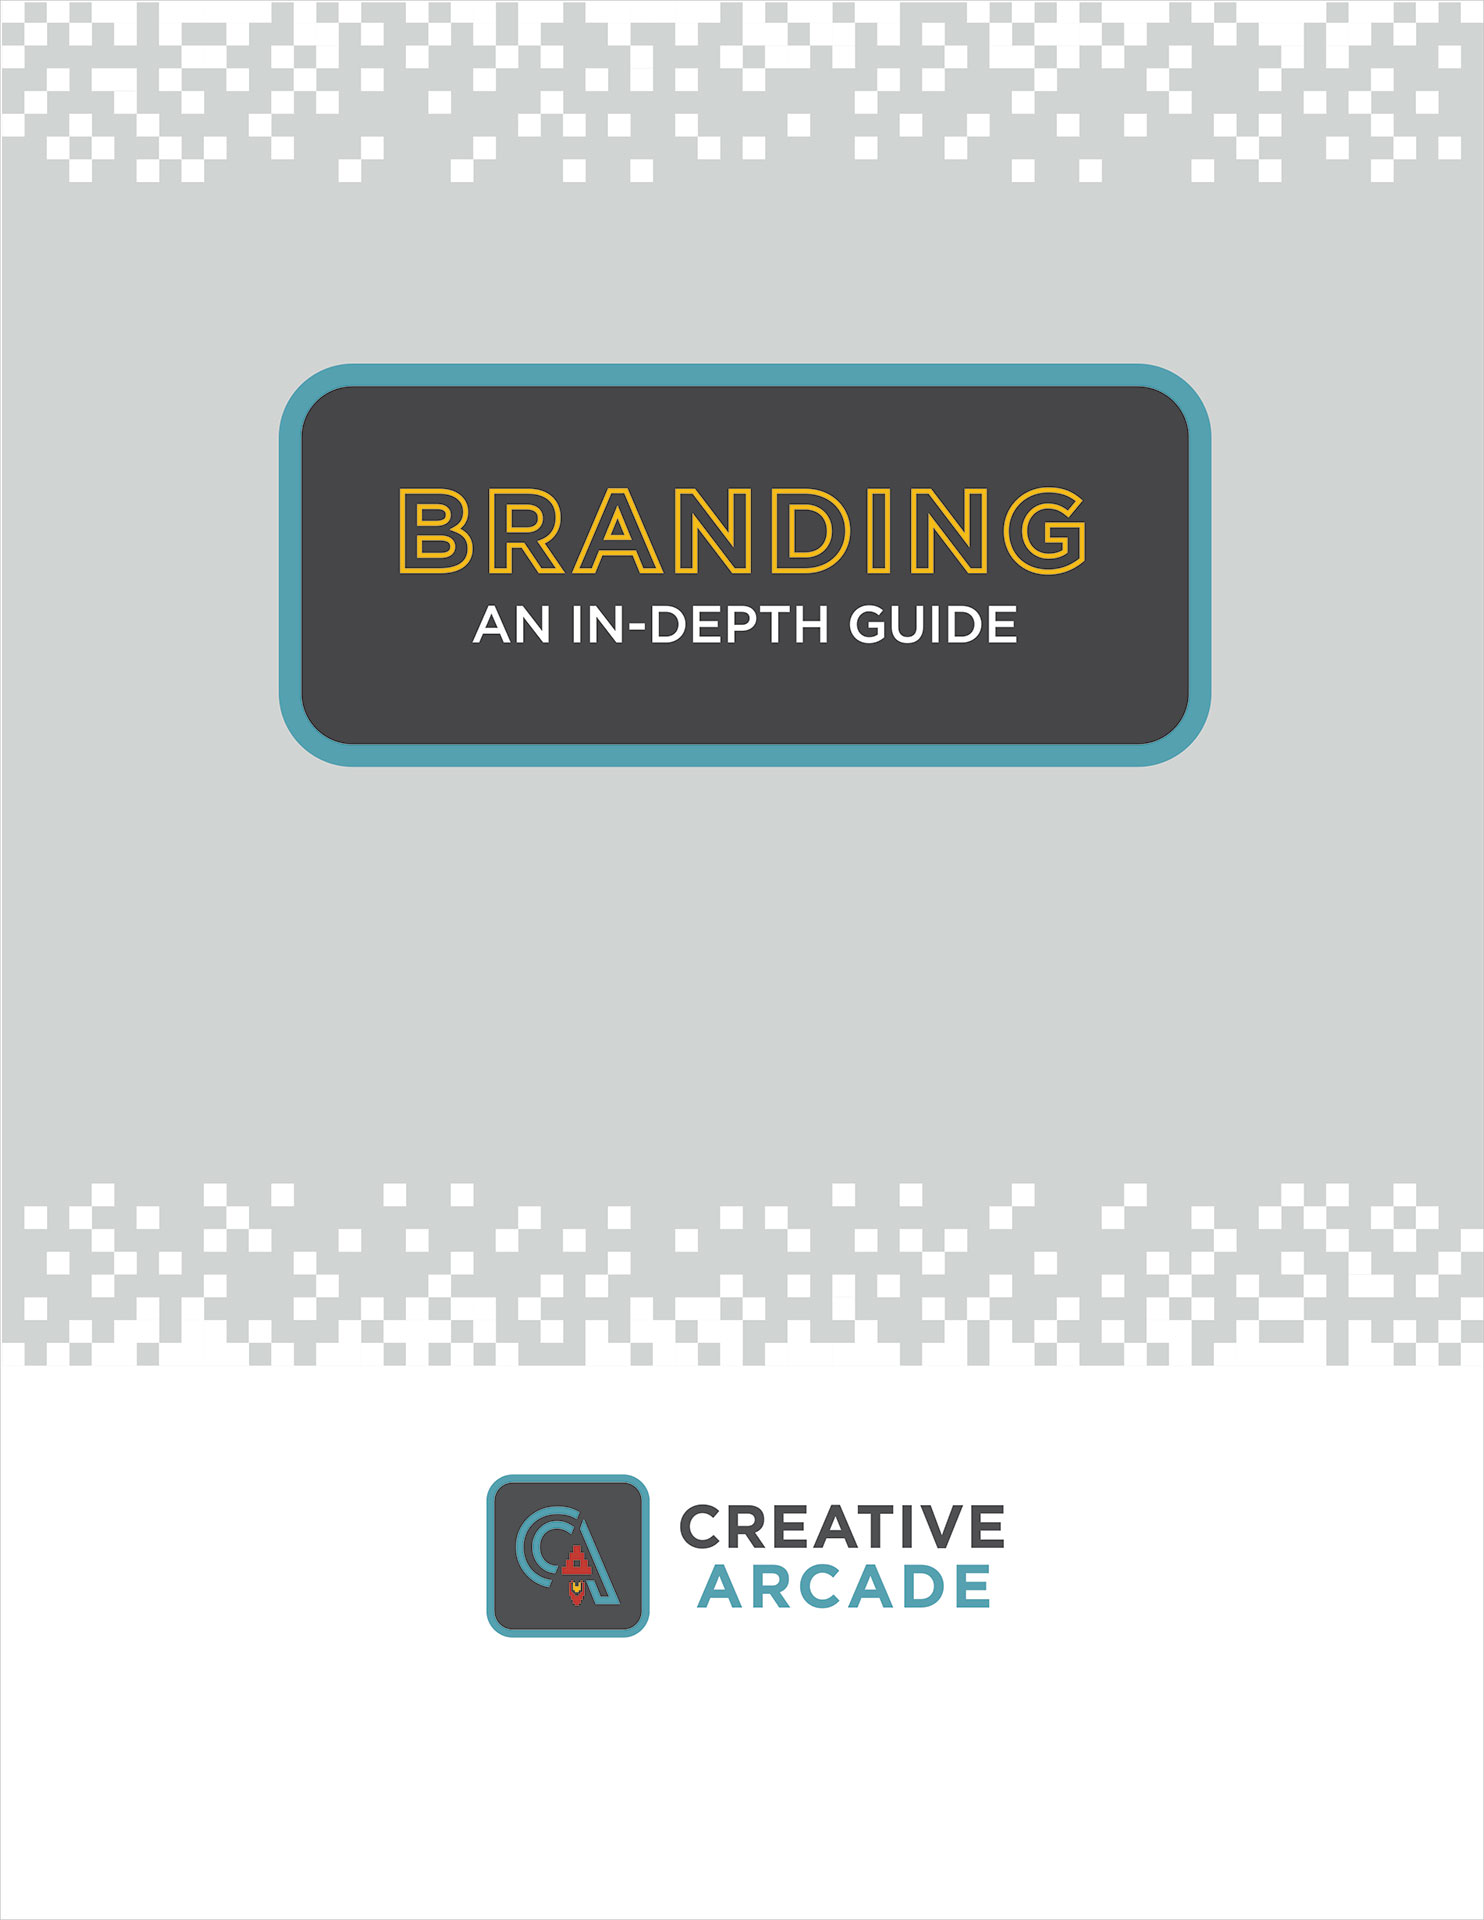 creative arcade branding guide cover